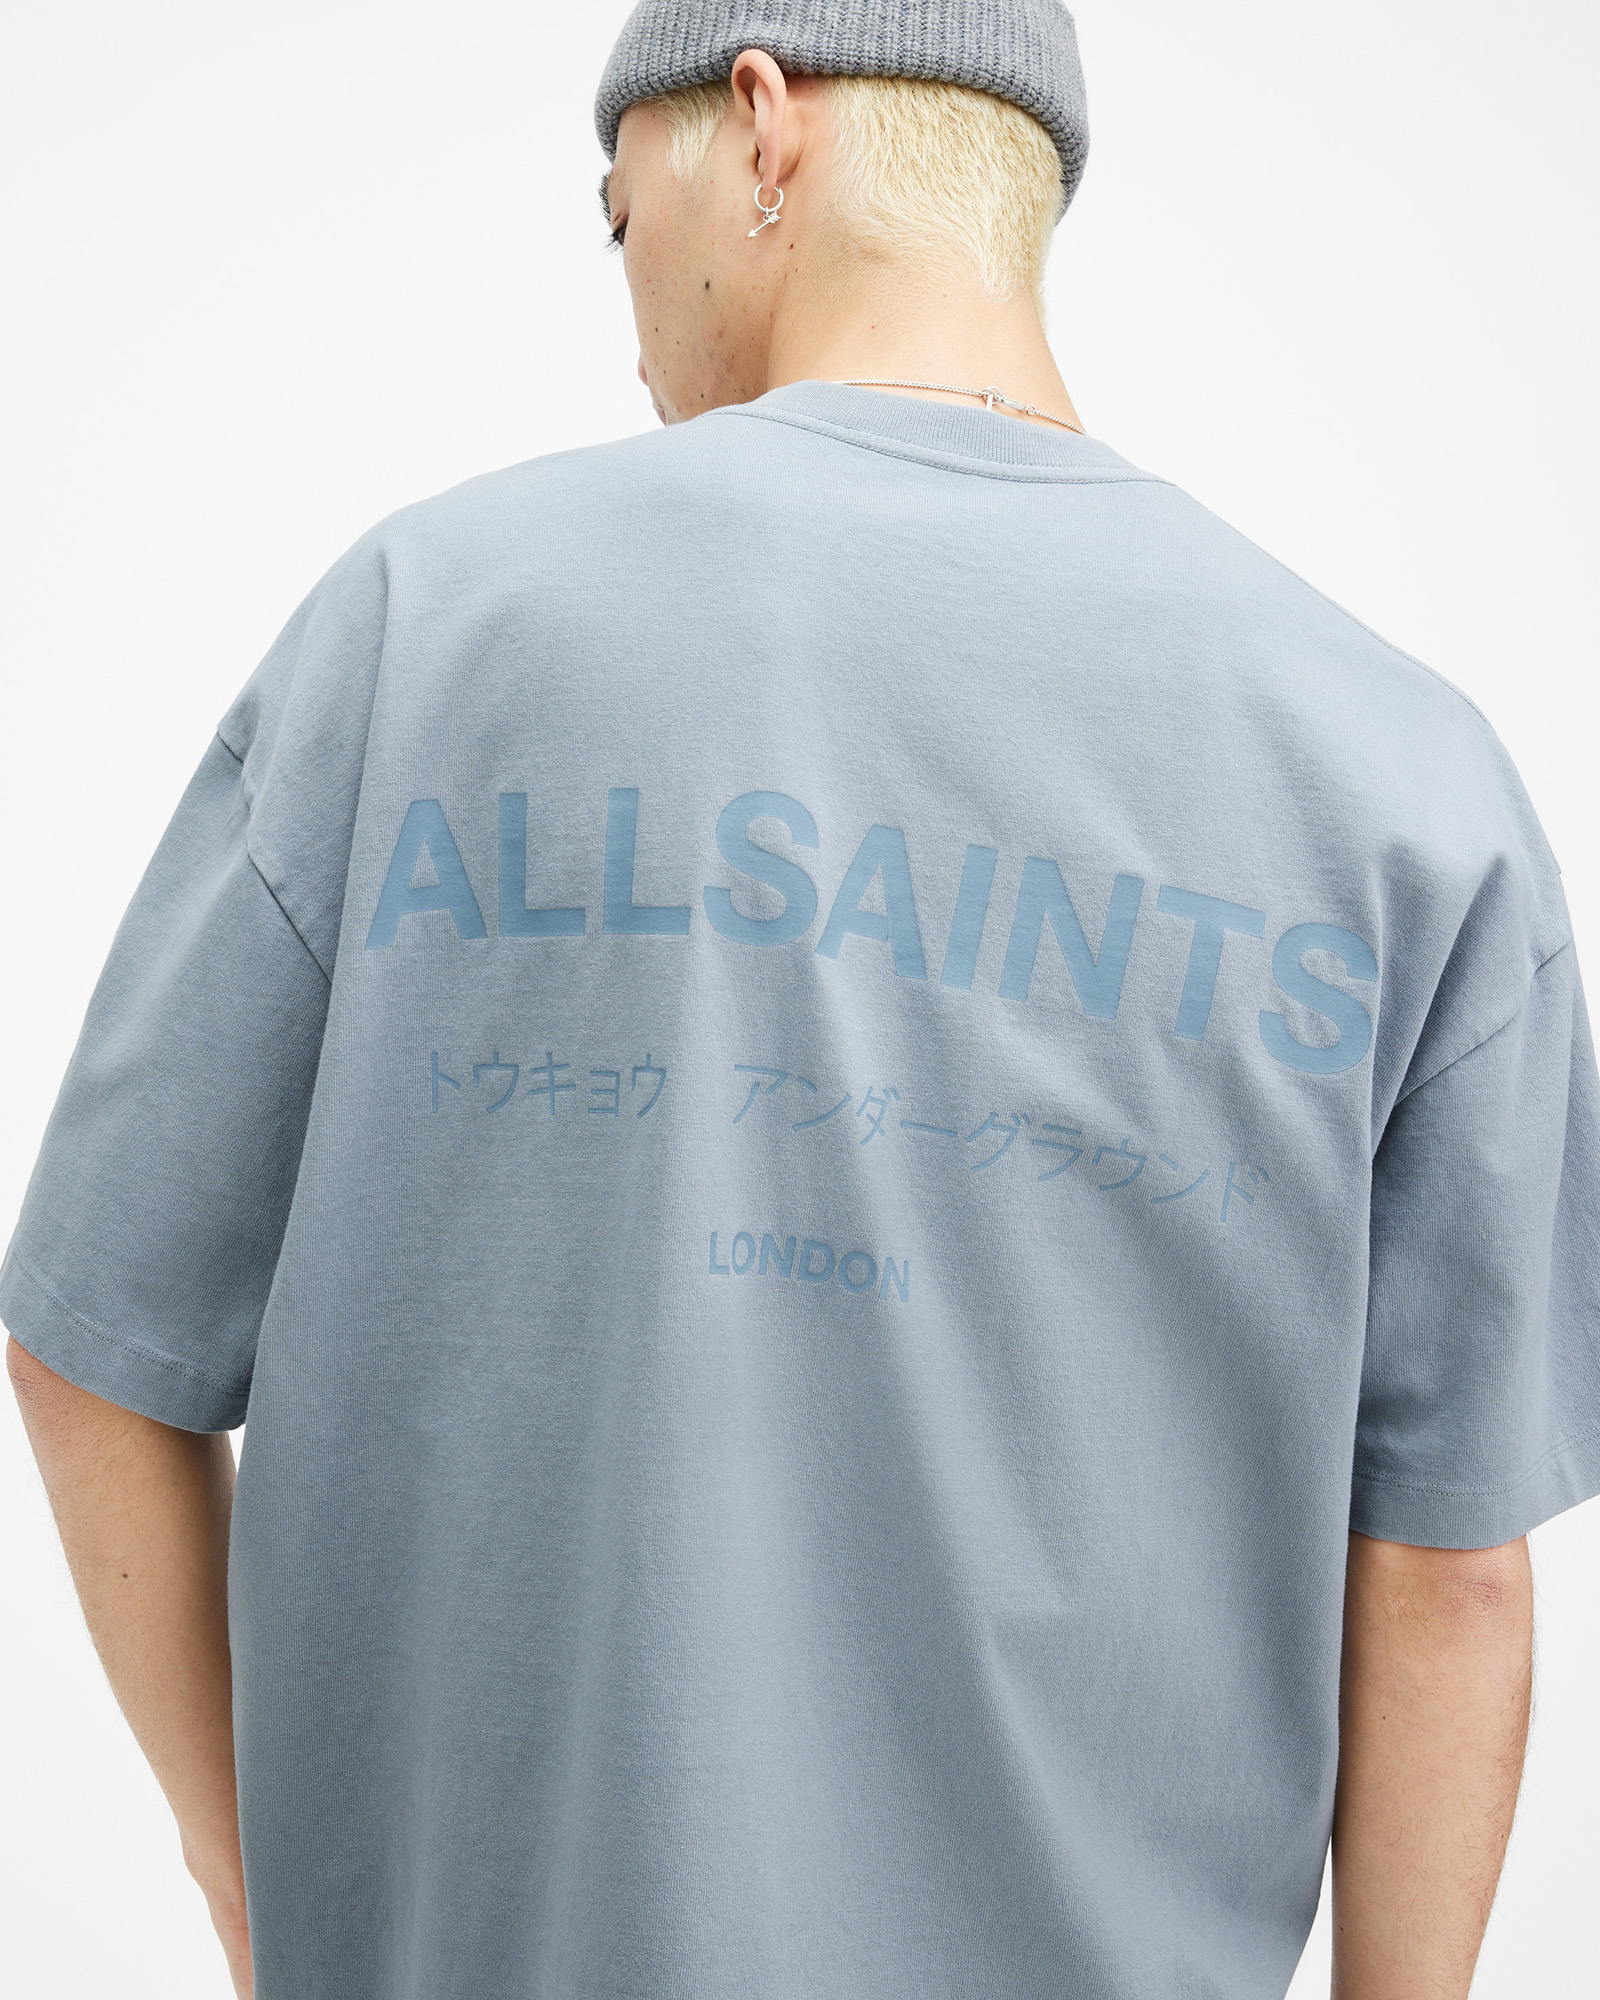 AllSaints Underground Oversized Crew Neck T-Shirt,, Dusty Blue